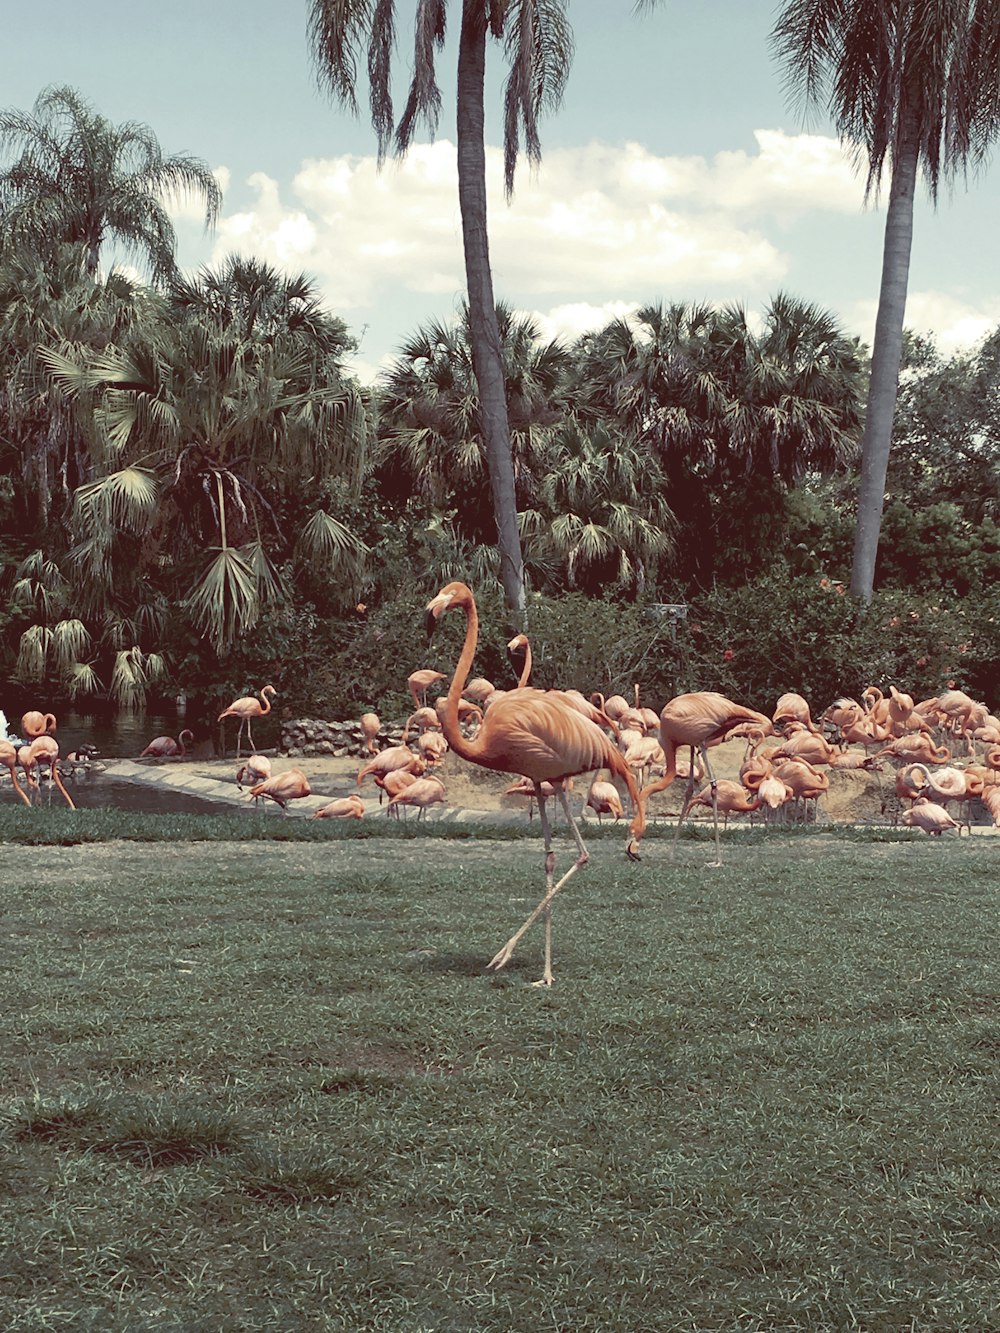 Flamingosherde tagsüber auf grünem Grasfeld